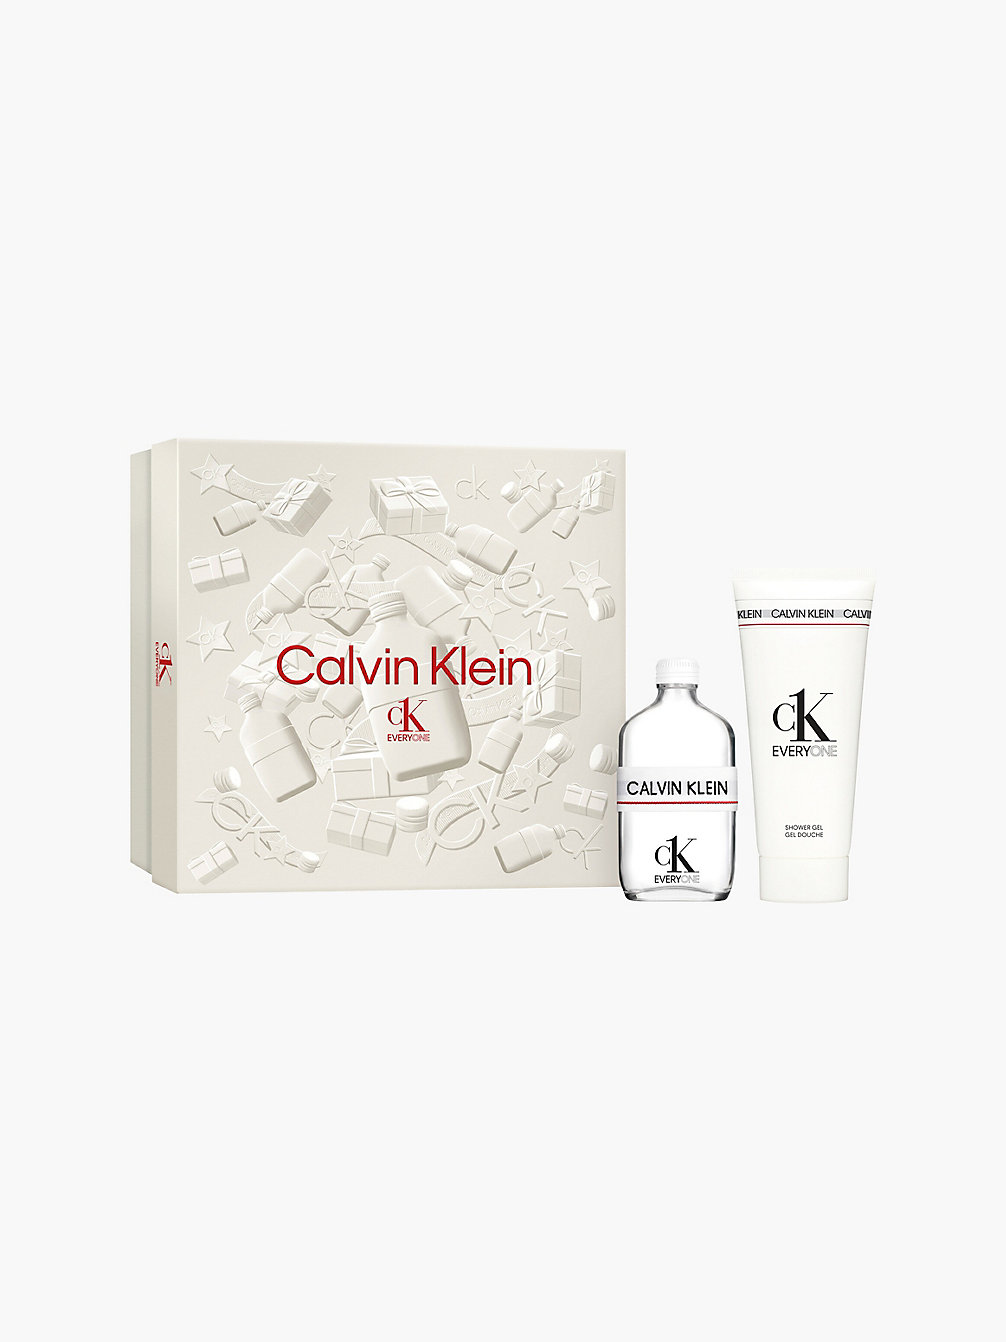 MULTI CK Everyone - Eau De Toilette Gift Set undefined unisex Calvin Klein